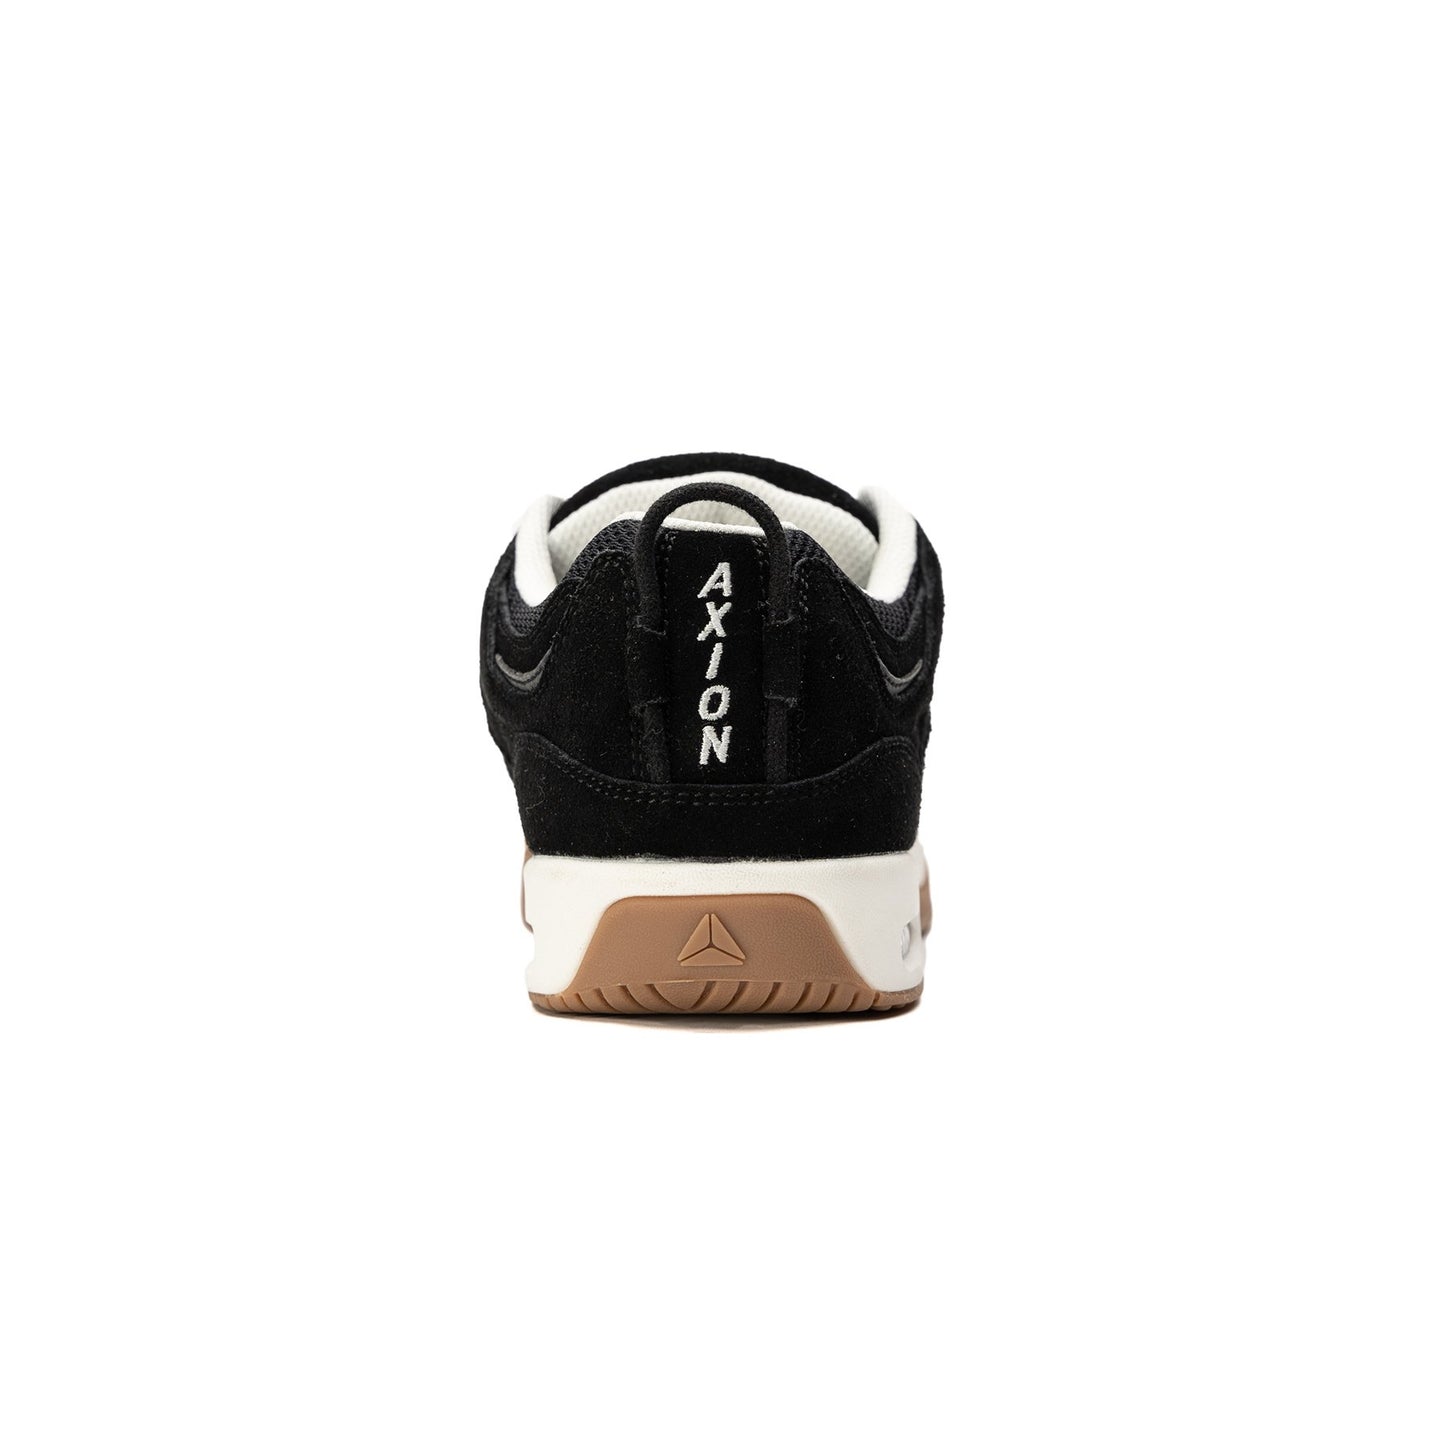 Axion Official Black/Gum Shoes